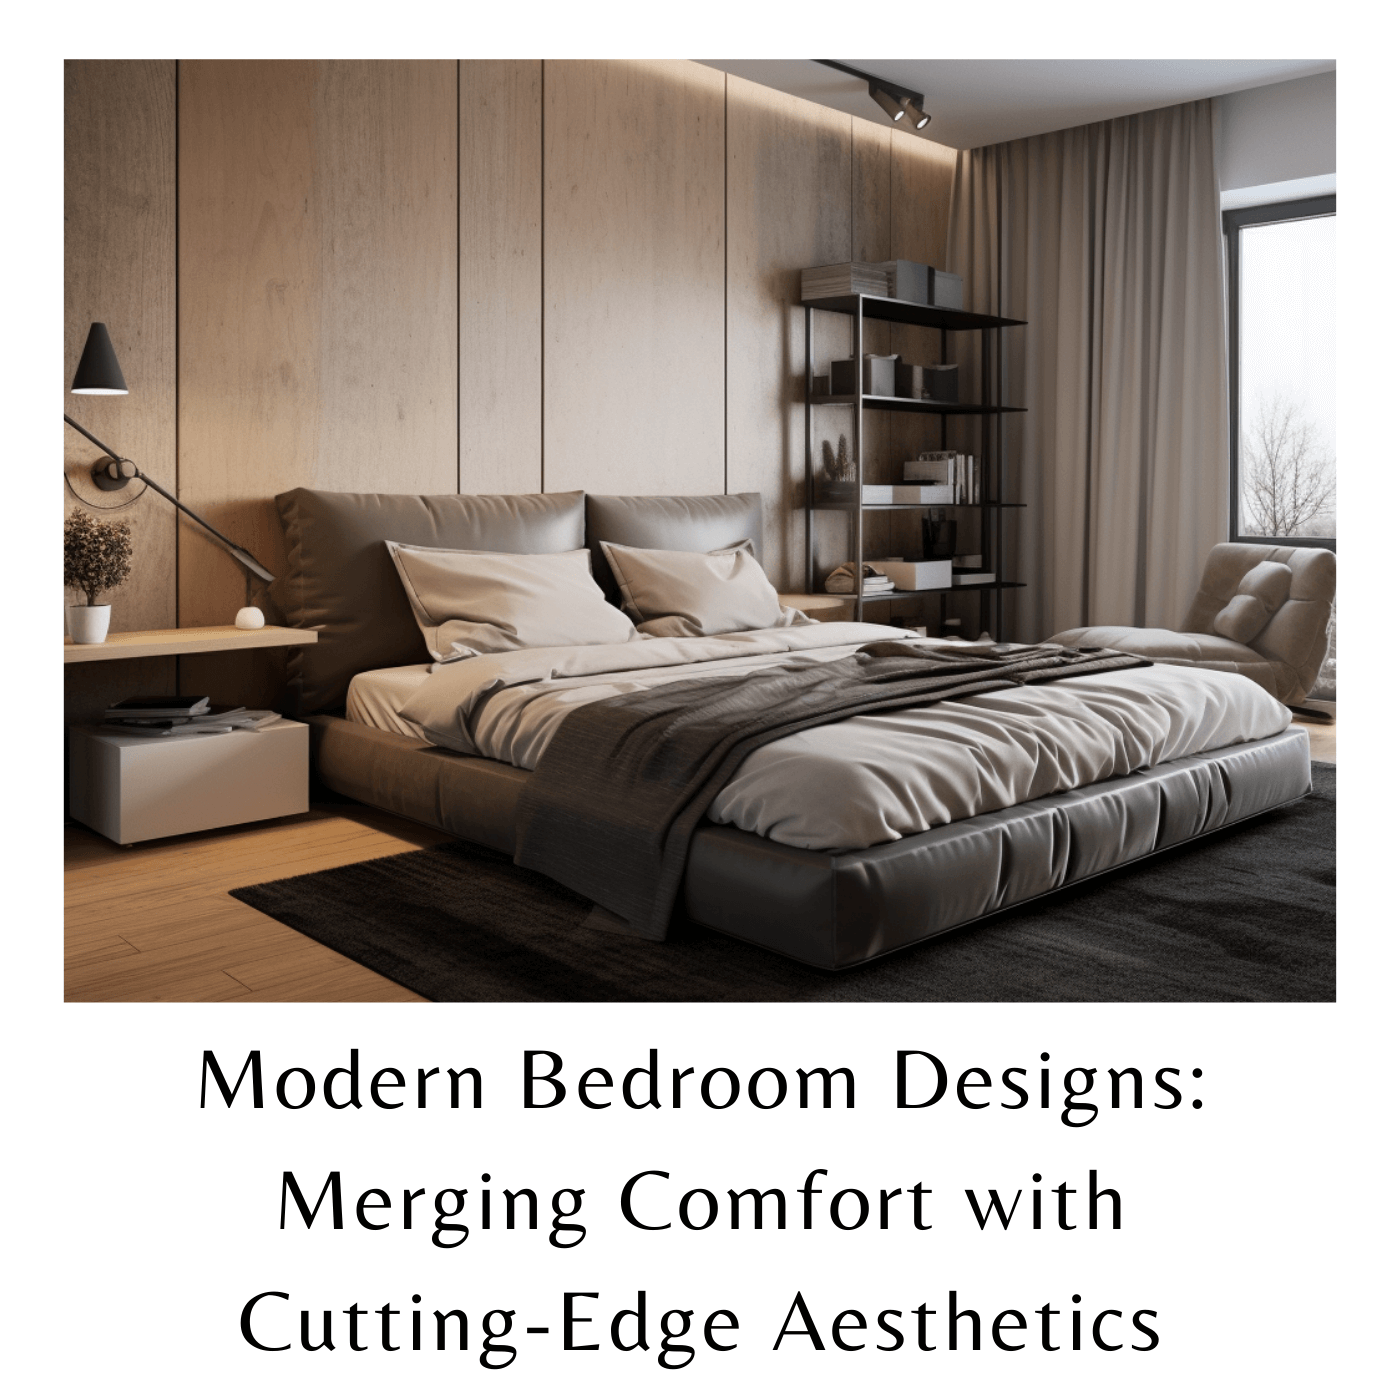 Modern Bedroom Designs: Merging Comfort with Cutting-Edge Aesthetics